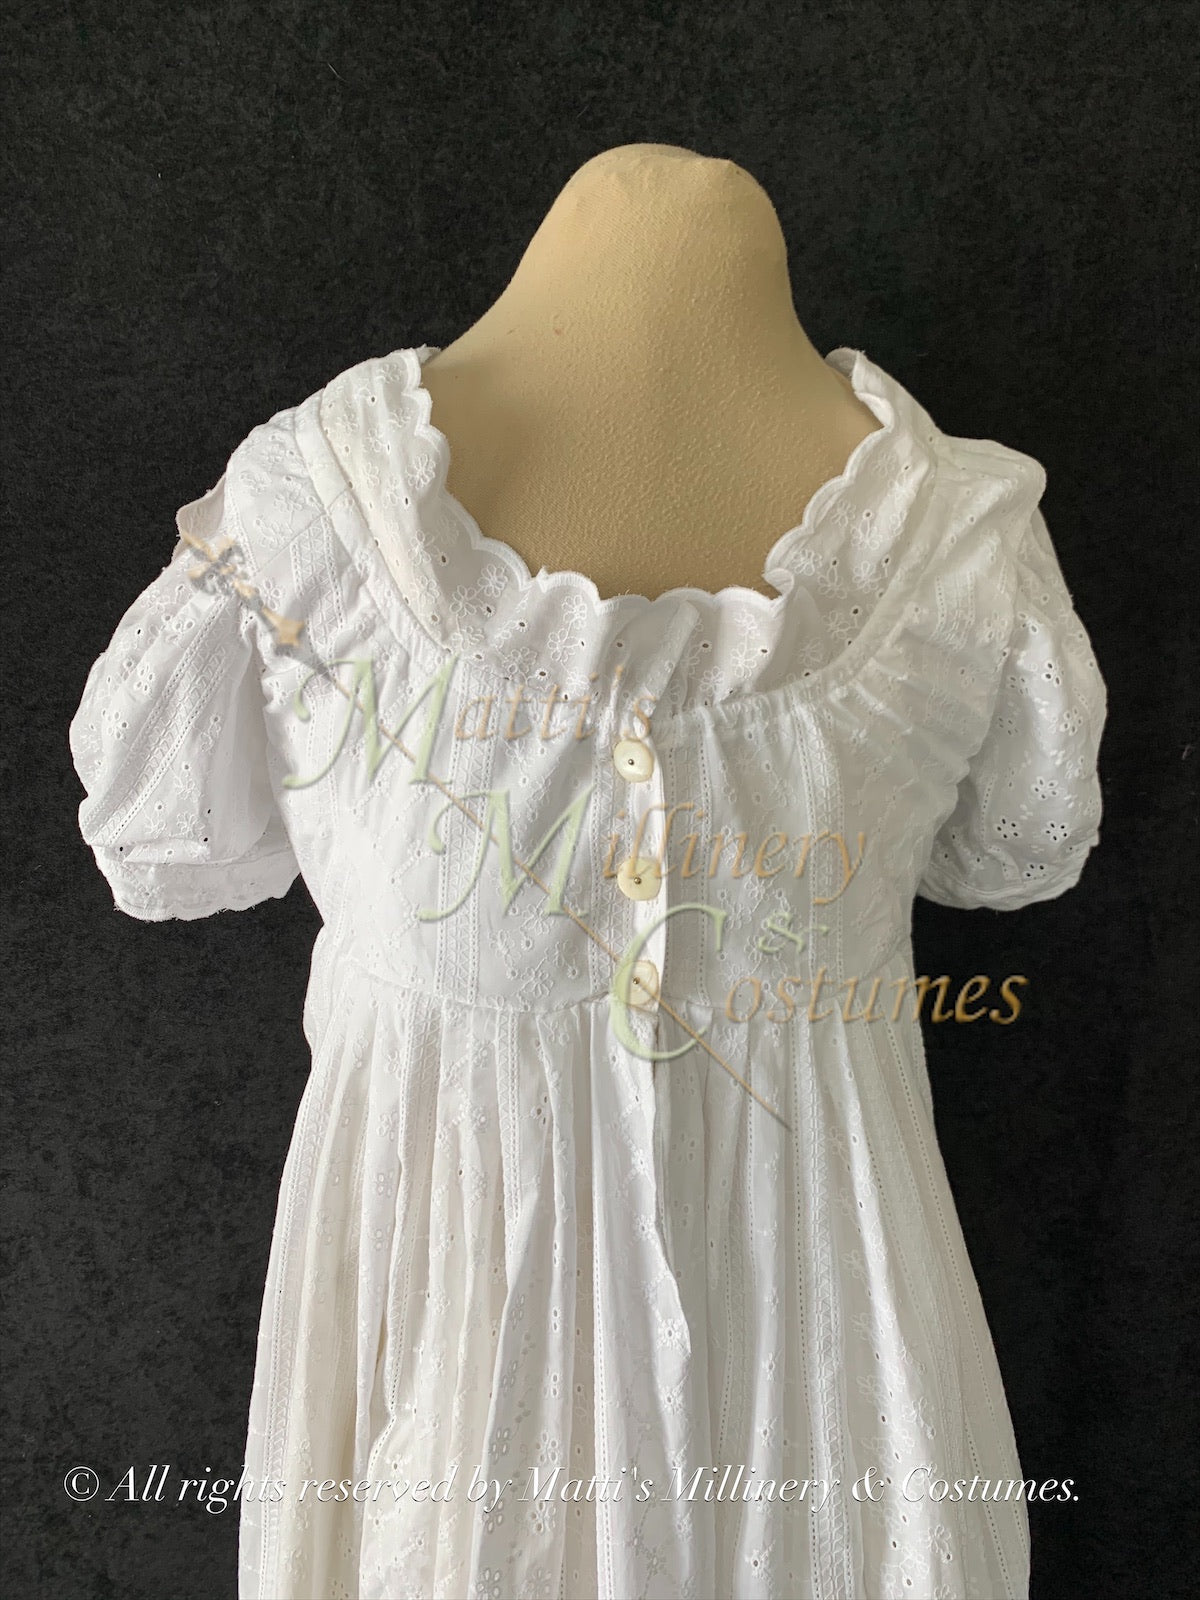 Fancy White Eyelet Cotton Jane Austen Regency Day Dress with crossover neckline